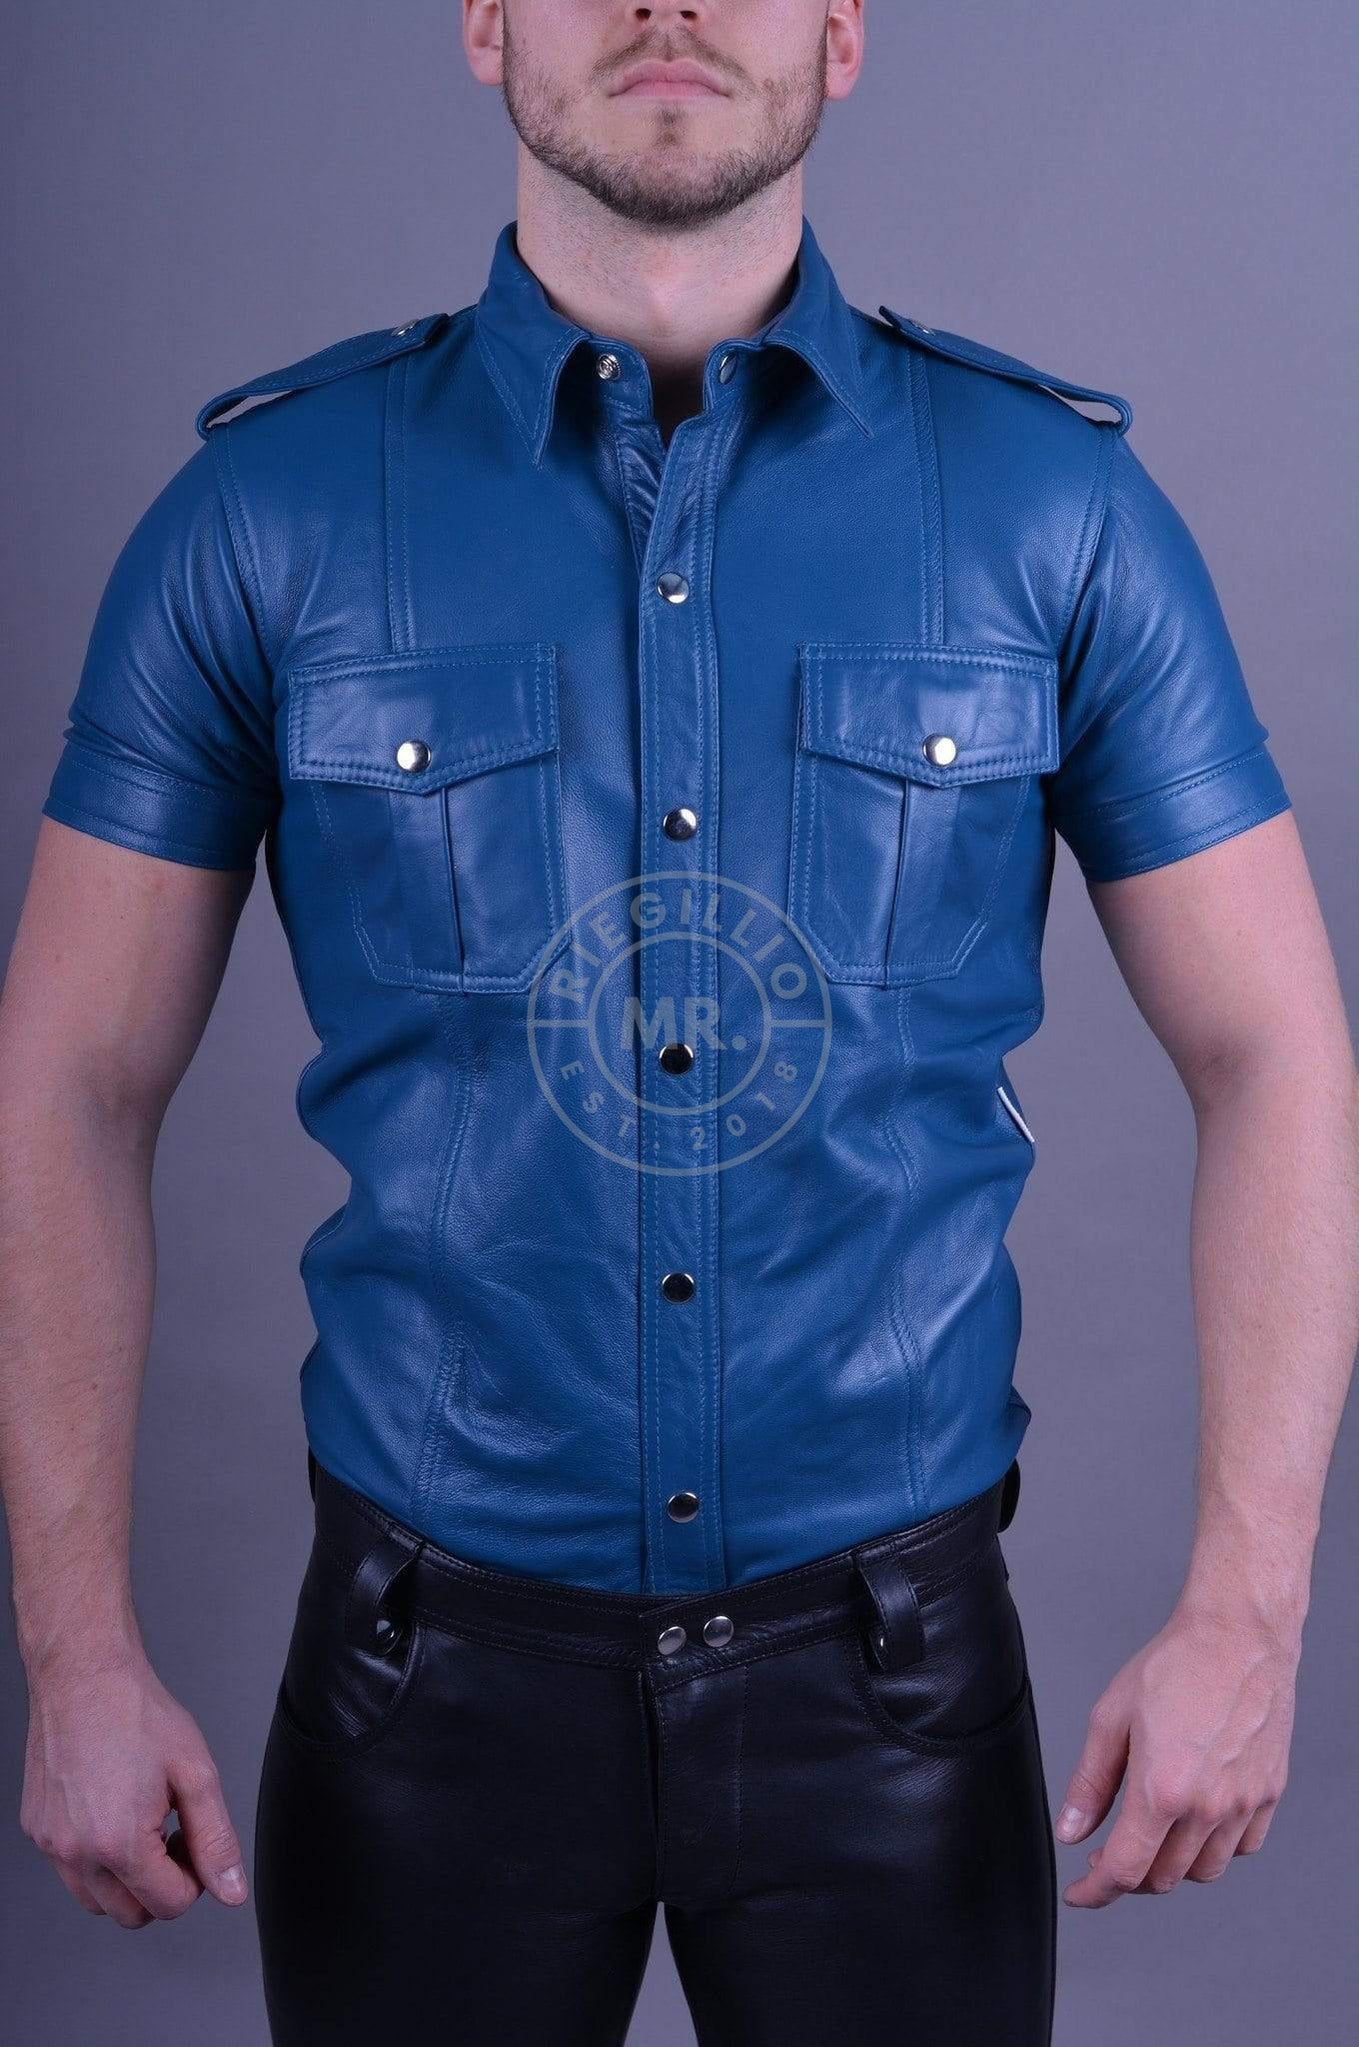 Jeans Blue Leather Shirt at MR. Riegillio